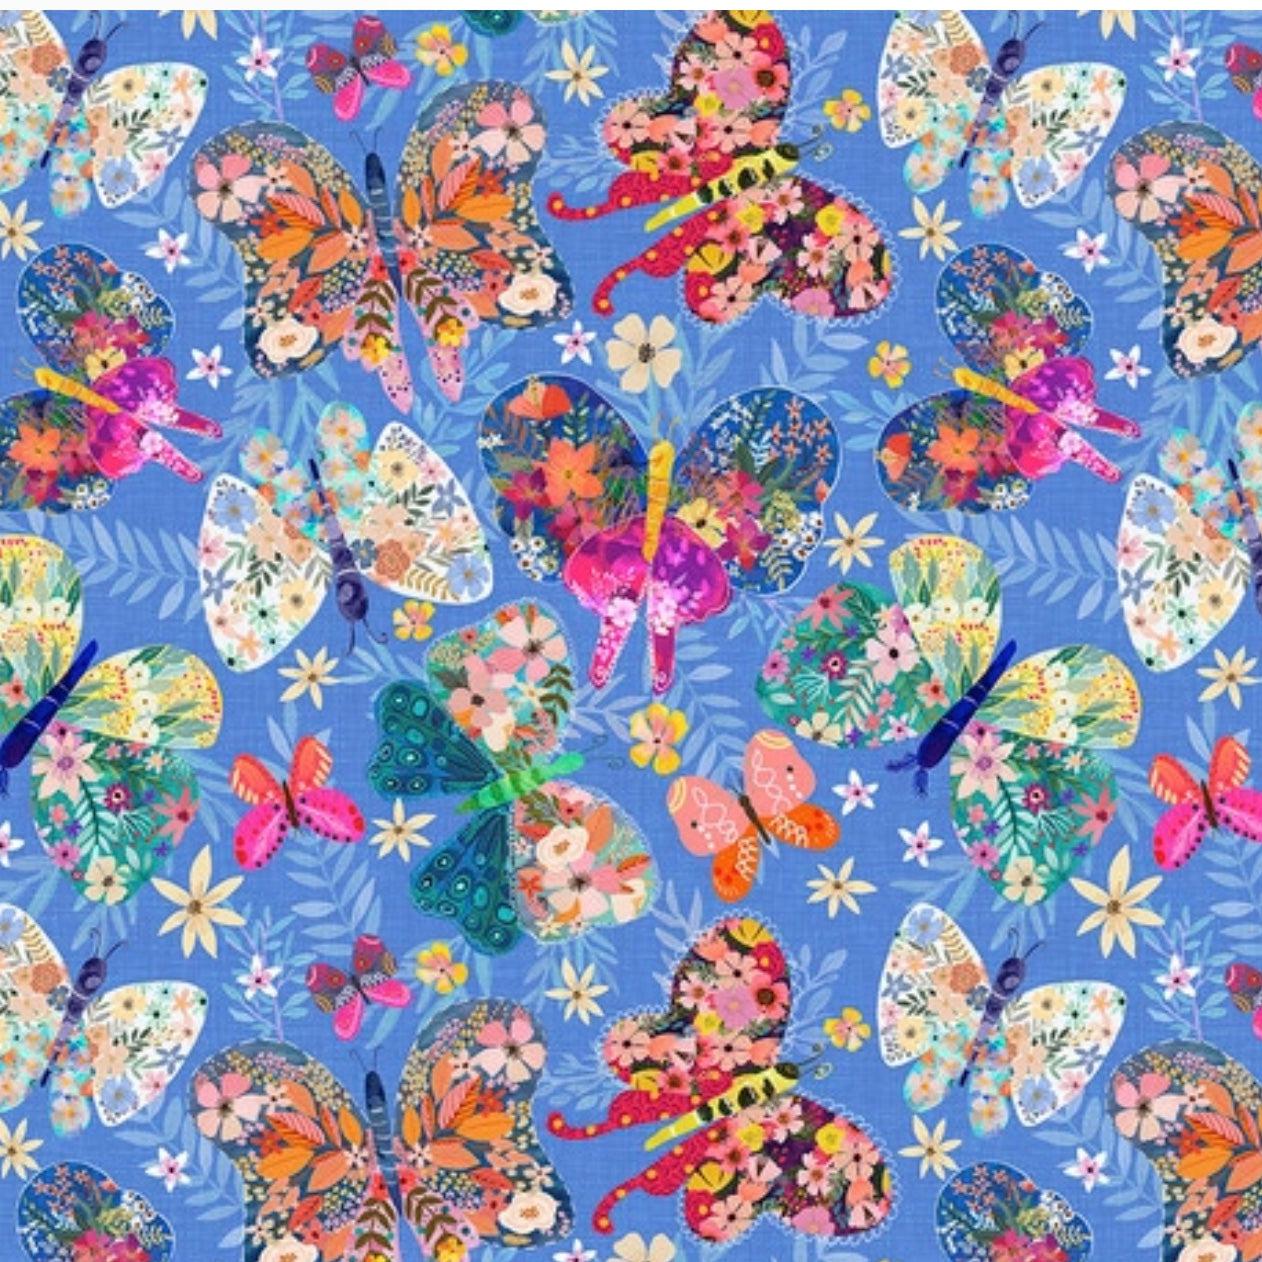 Magic Friends Blue Butterfly Paradise Fabric-Free Spirit Fabrics-My Favorite Quilt Store